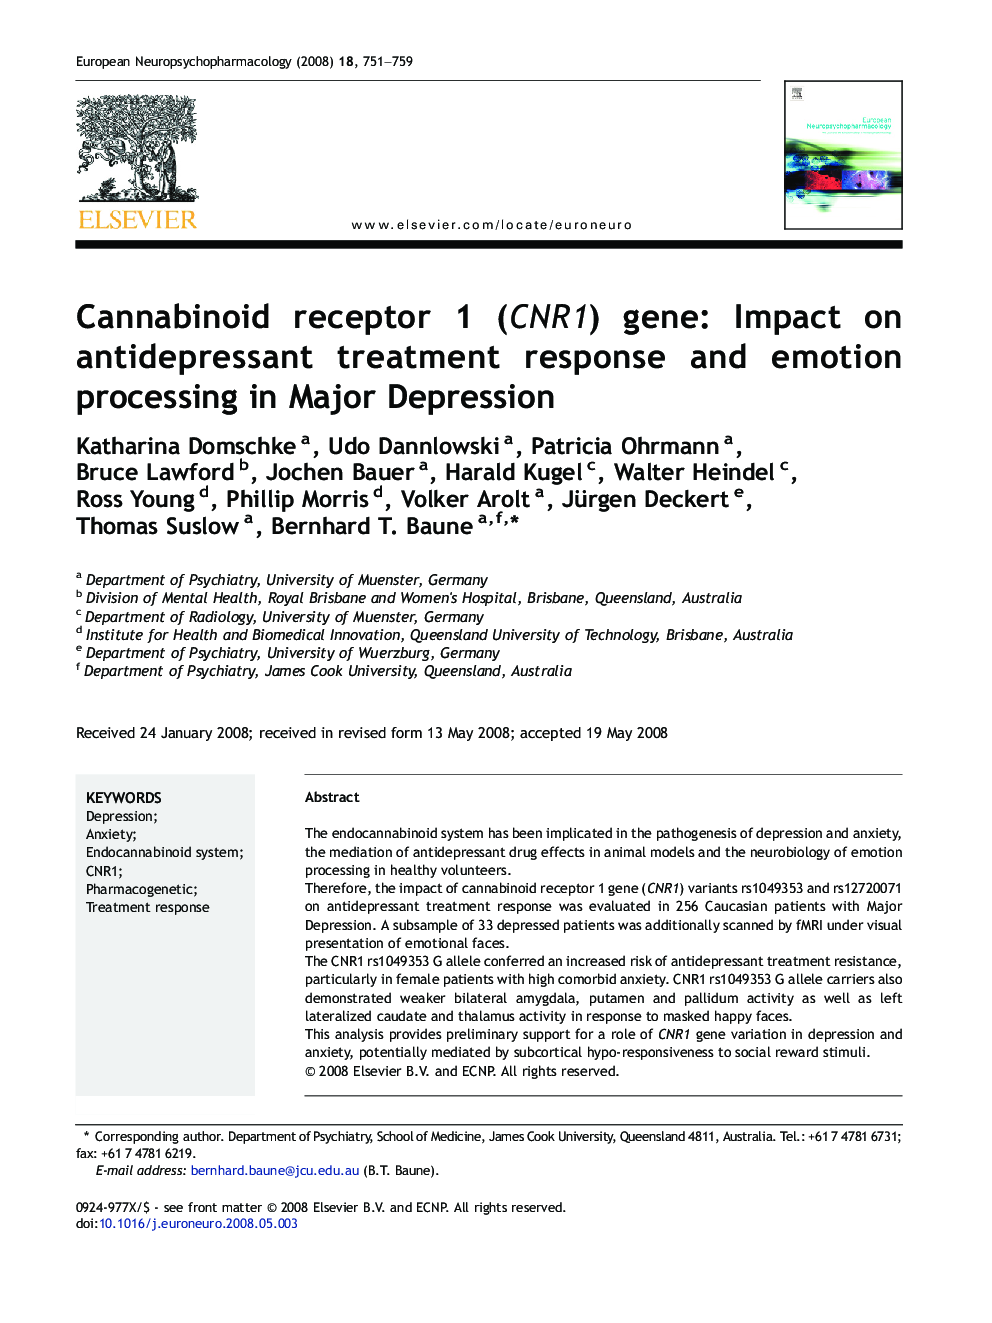 Cannabinoid receptor 1 (CNR1) gene: Impact on antidepressant treatment response and emotion processing in Major Depression